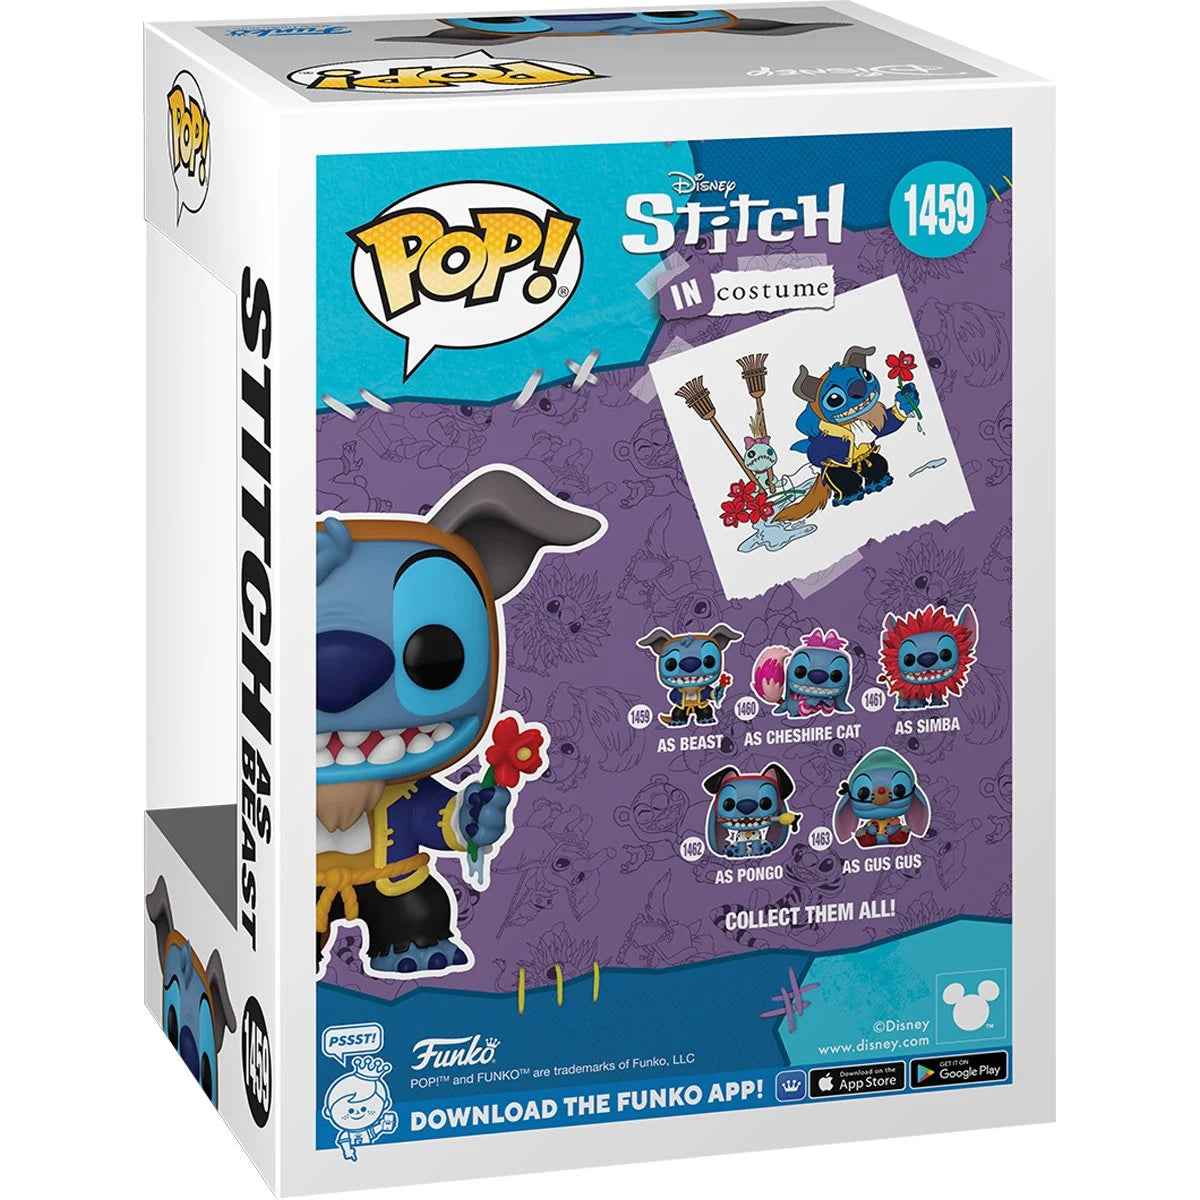 Funko Pop! Lilo & Stitch - Costume Stitch as Beast